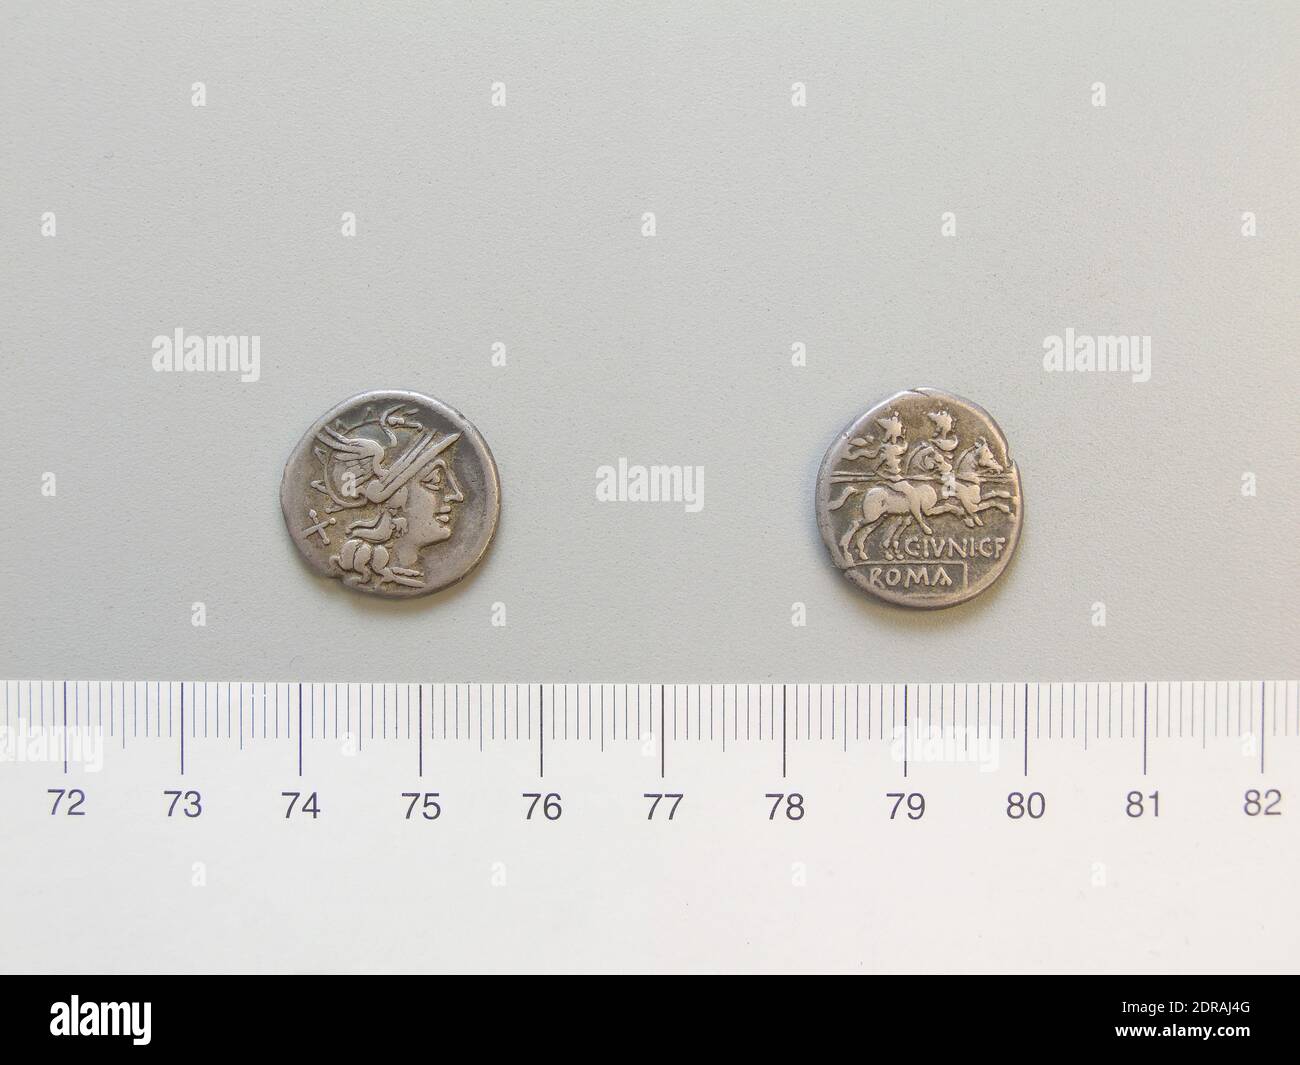 Mint: Rome, Magistrate: C. IVNI C.F., Denarius from Rome, 149 B.C., Silver, 3.87 g, 3:00, 18 mm, Made in Rome, Italy, Roman, 2nd century B.C., Numismatics Stock Photo